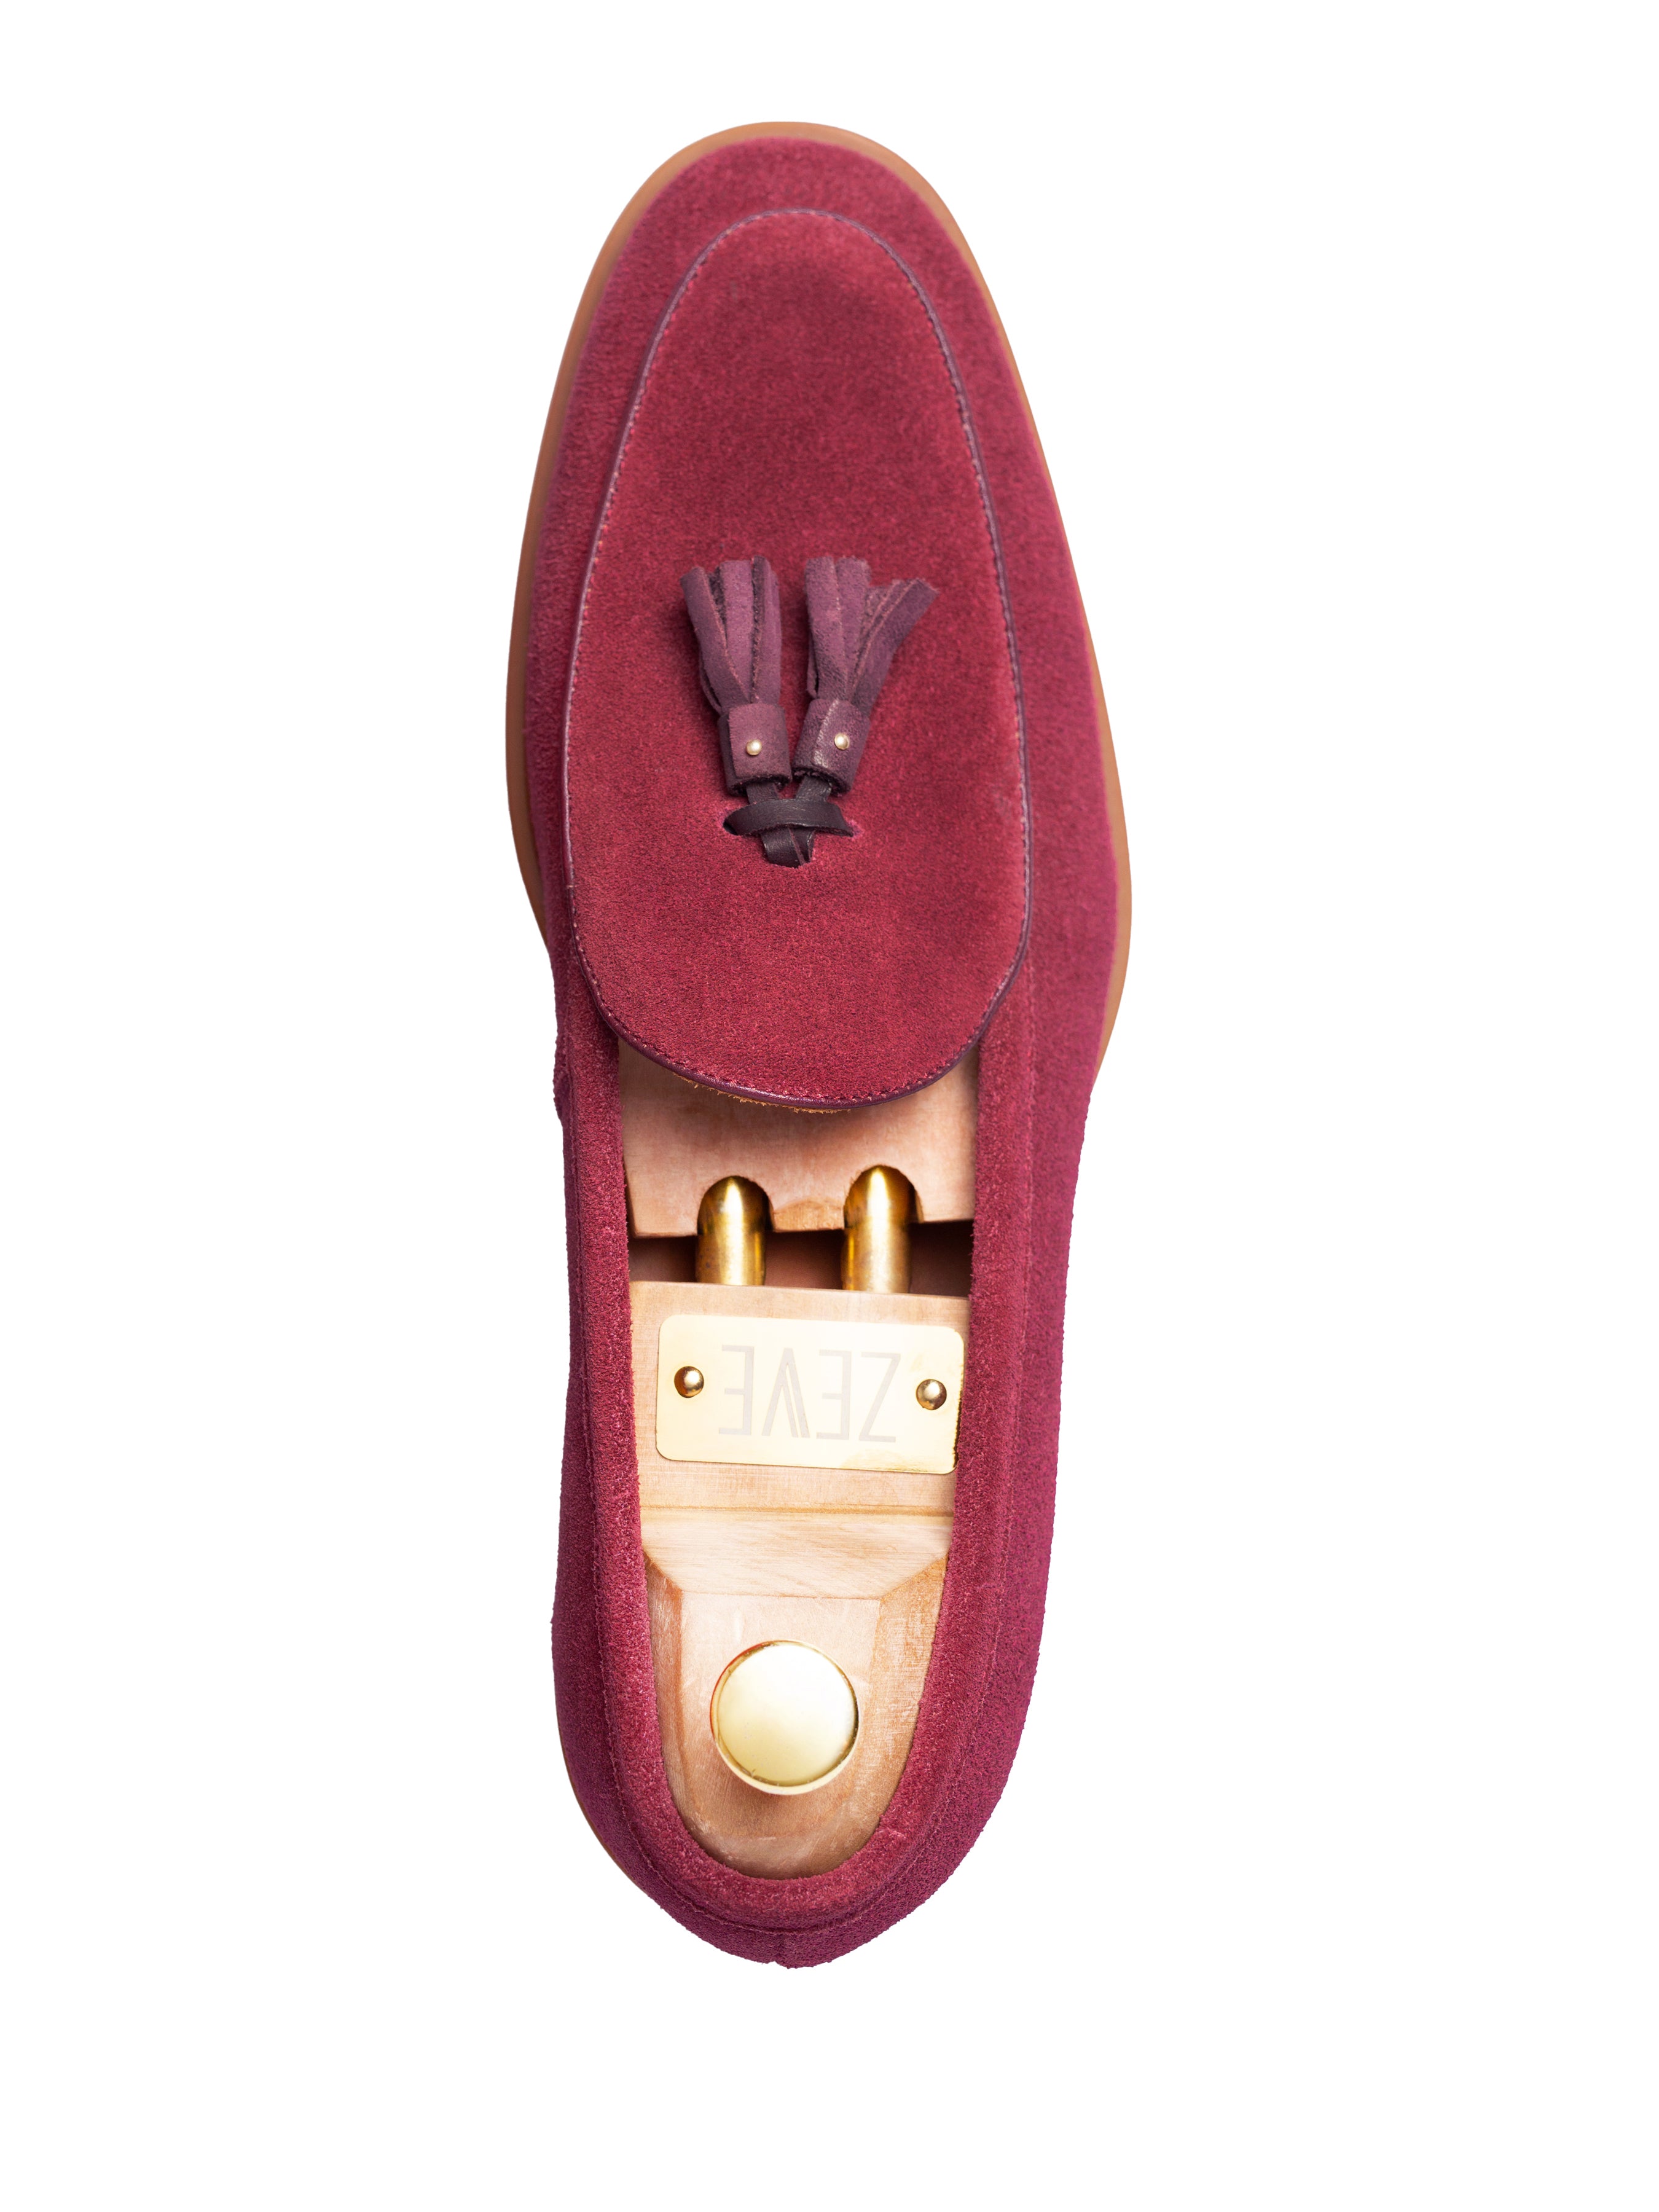 Belgian Loafer Tassel - Maroon Suede Leather (Soflex Sole) - Zeve Shoes